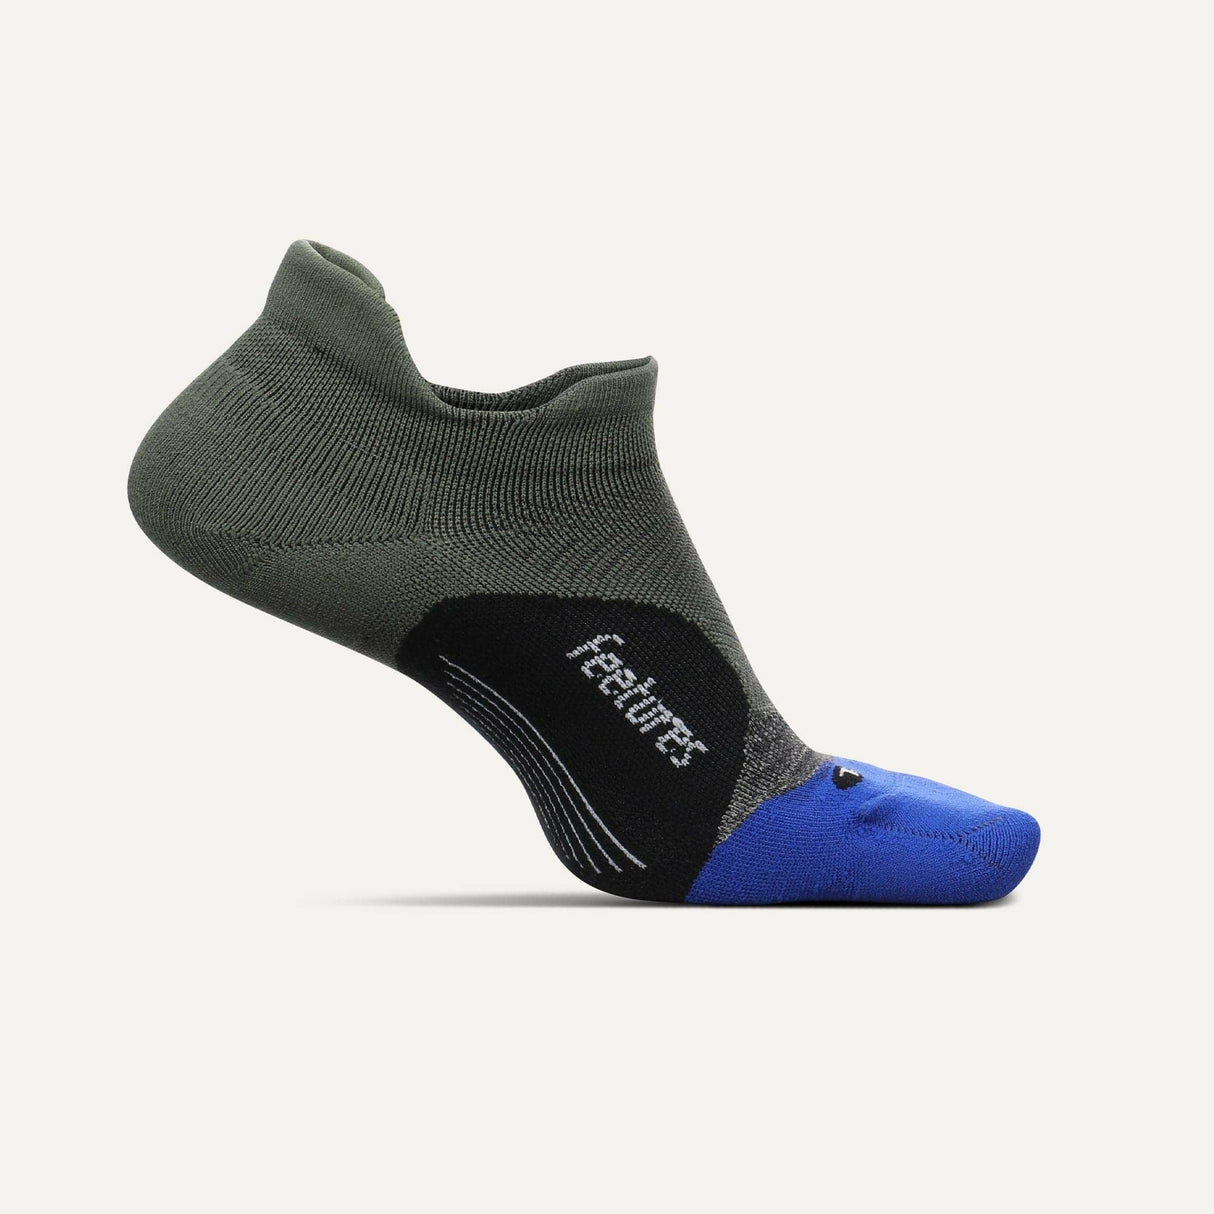 Feetures Elite Ultra Light No Show Tab Socks - Clearance  -  Small / Moss Green